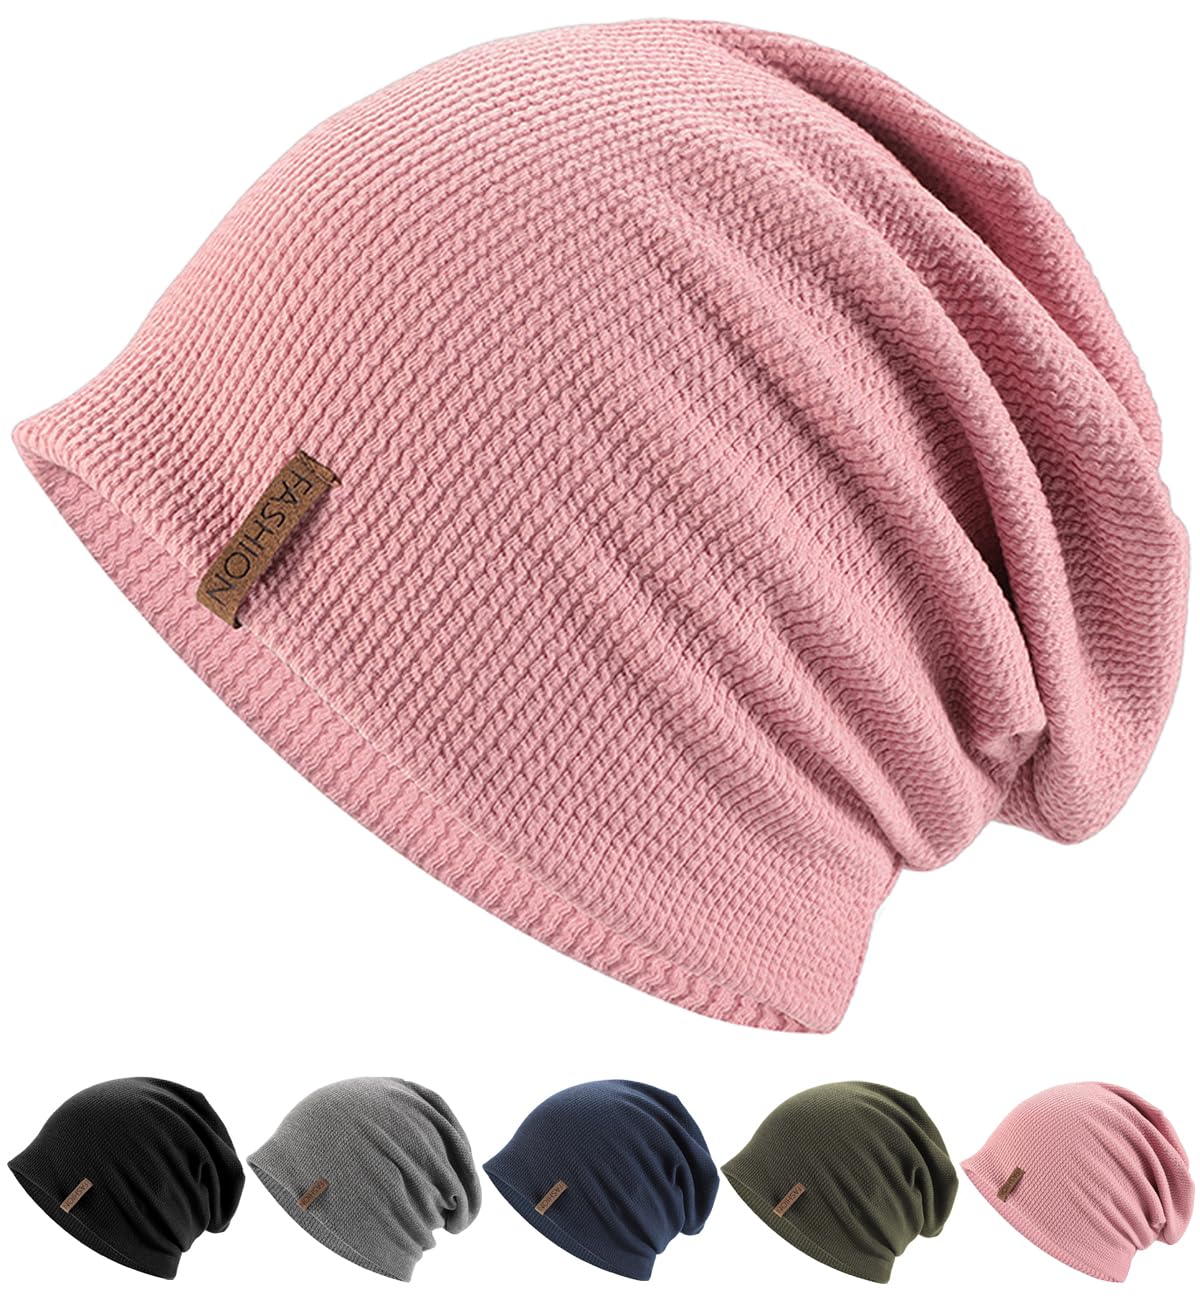 Lavento ニット帽 ニット帽子メンズ 秋冬 かぶり心地の良さ・柔らかさの2層仕立て 伸縮性・360度美シルエット 帽子メンズ レディース 冬